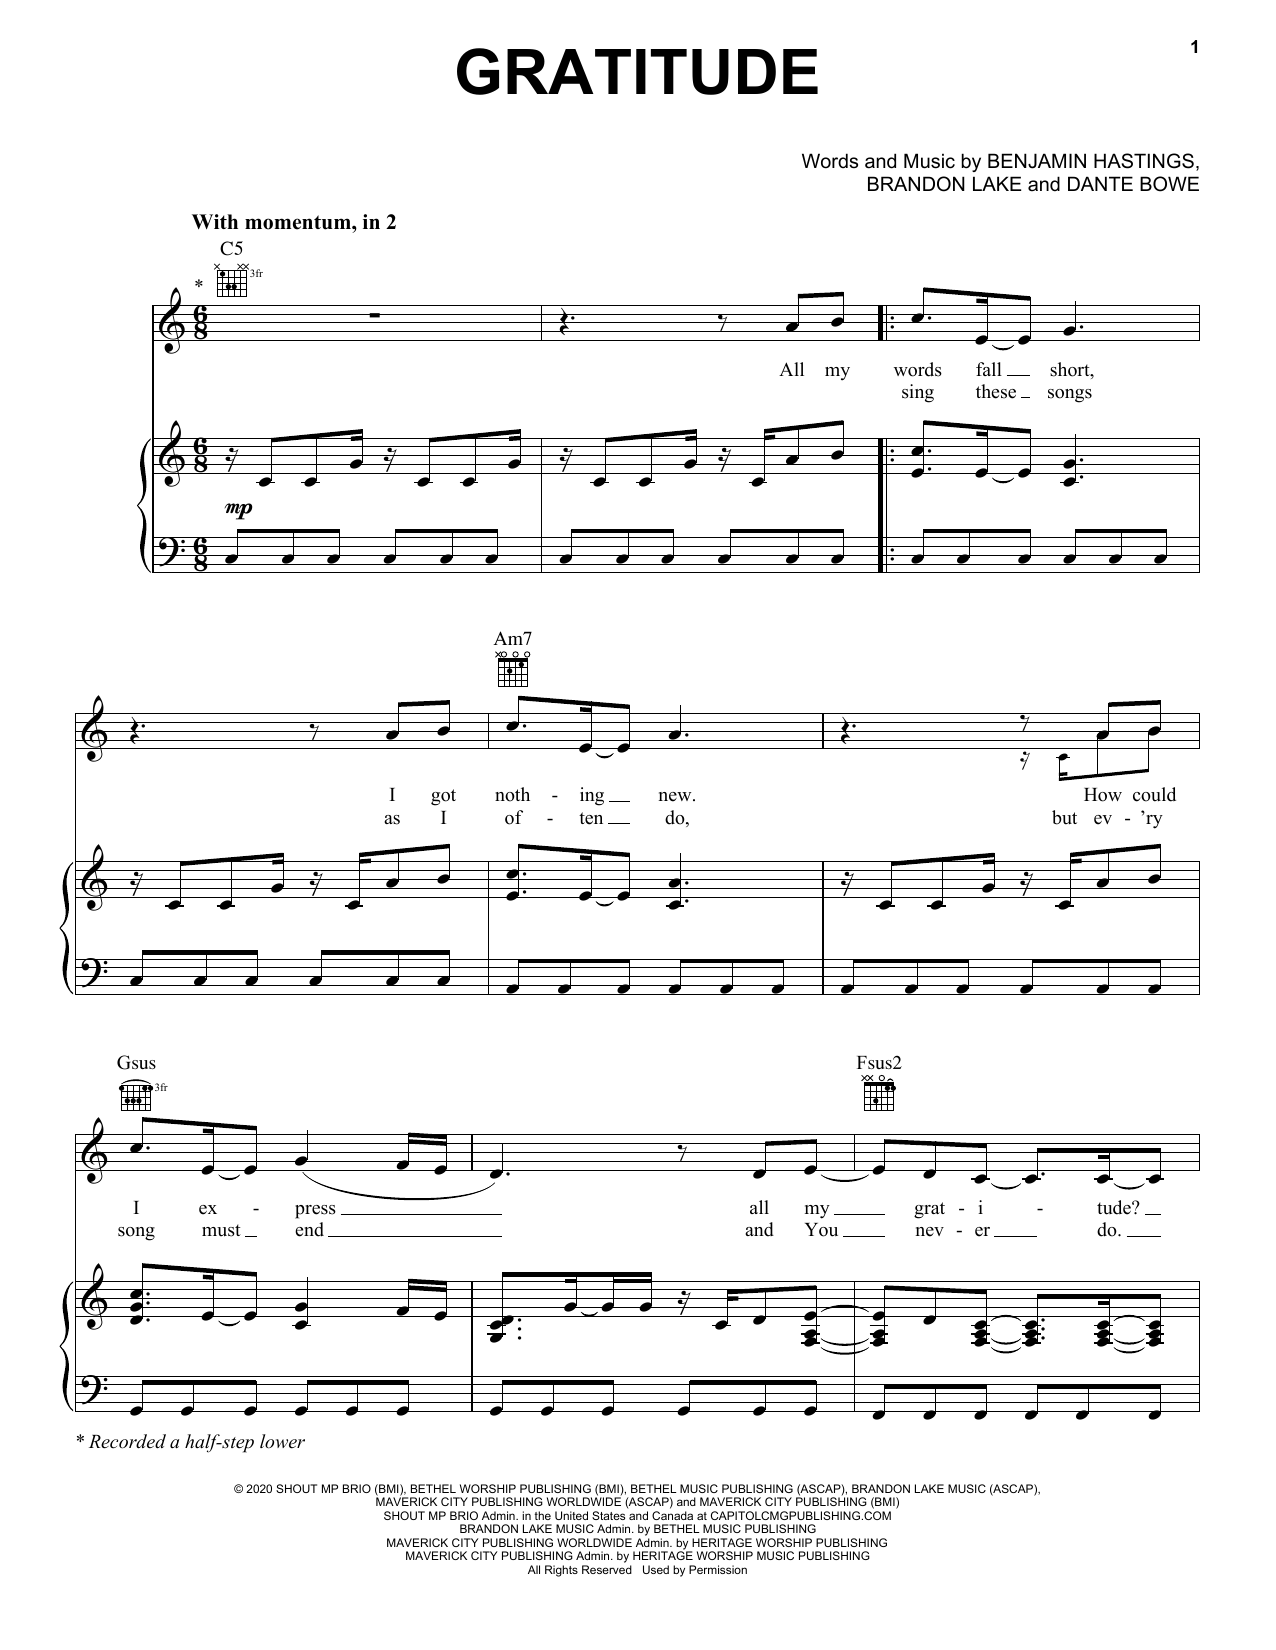 Brandon Lake Gratitude sheet music notes and chords arranged for Lead Sheet / Fake Book